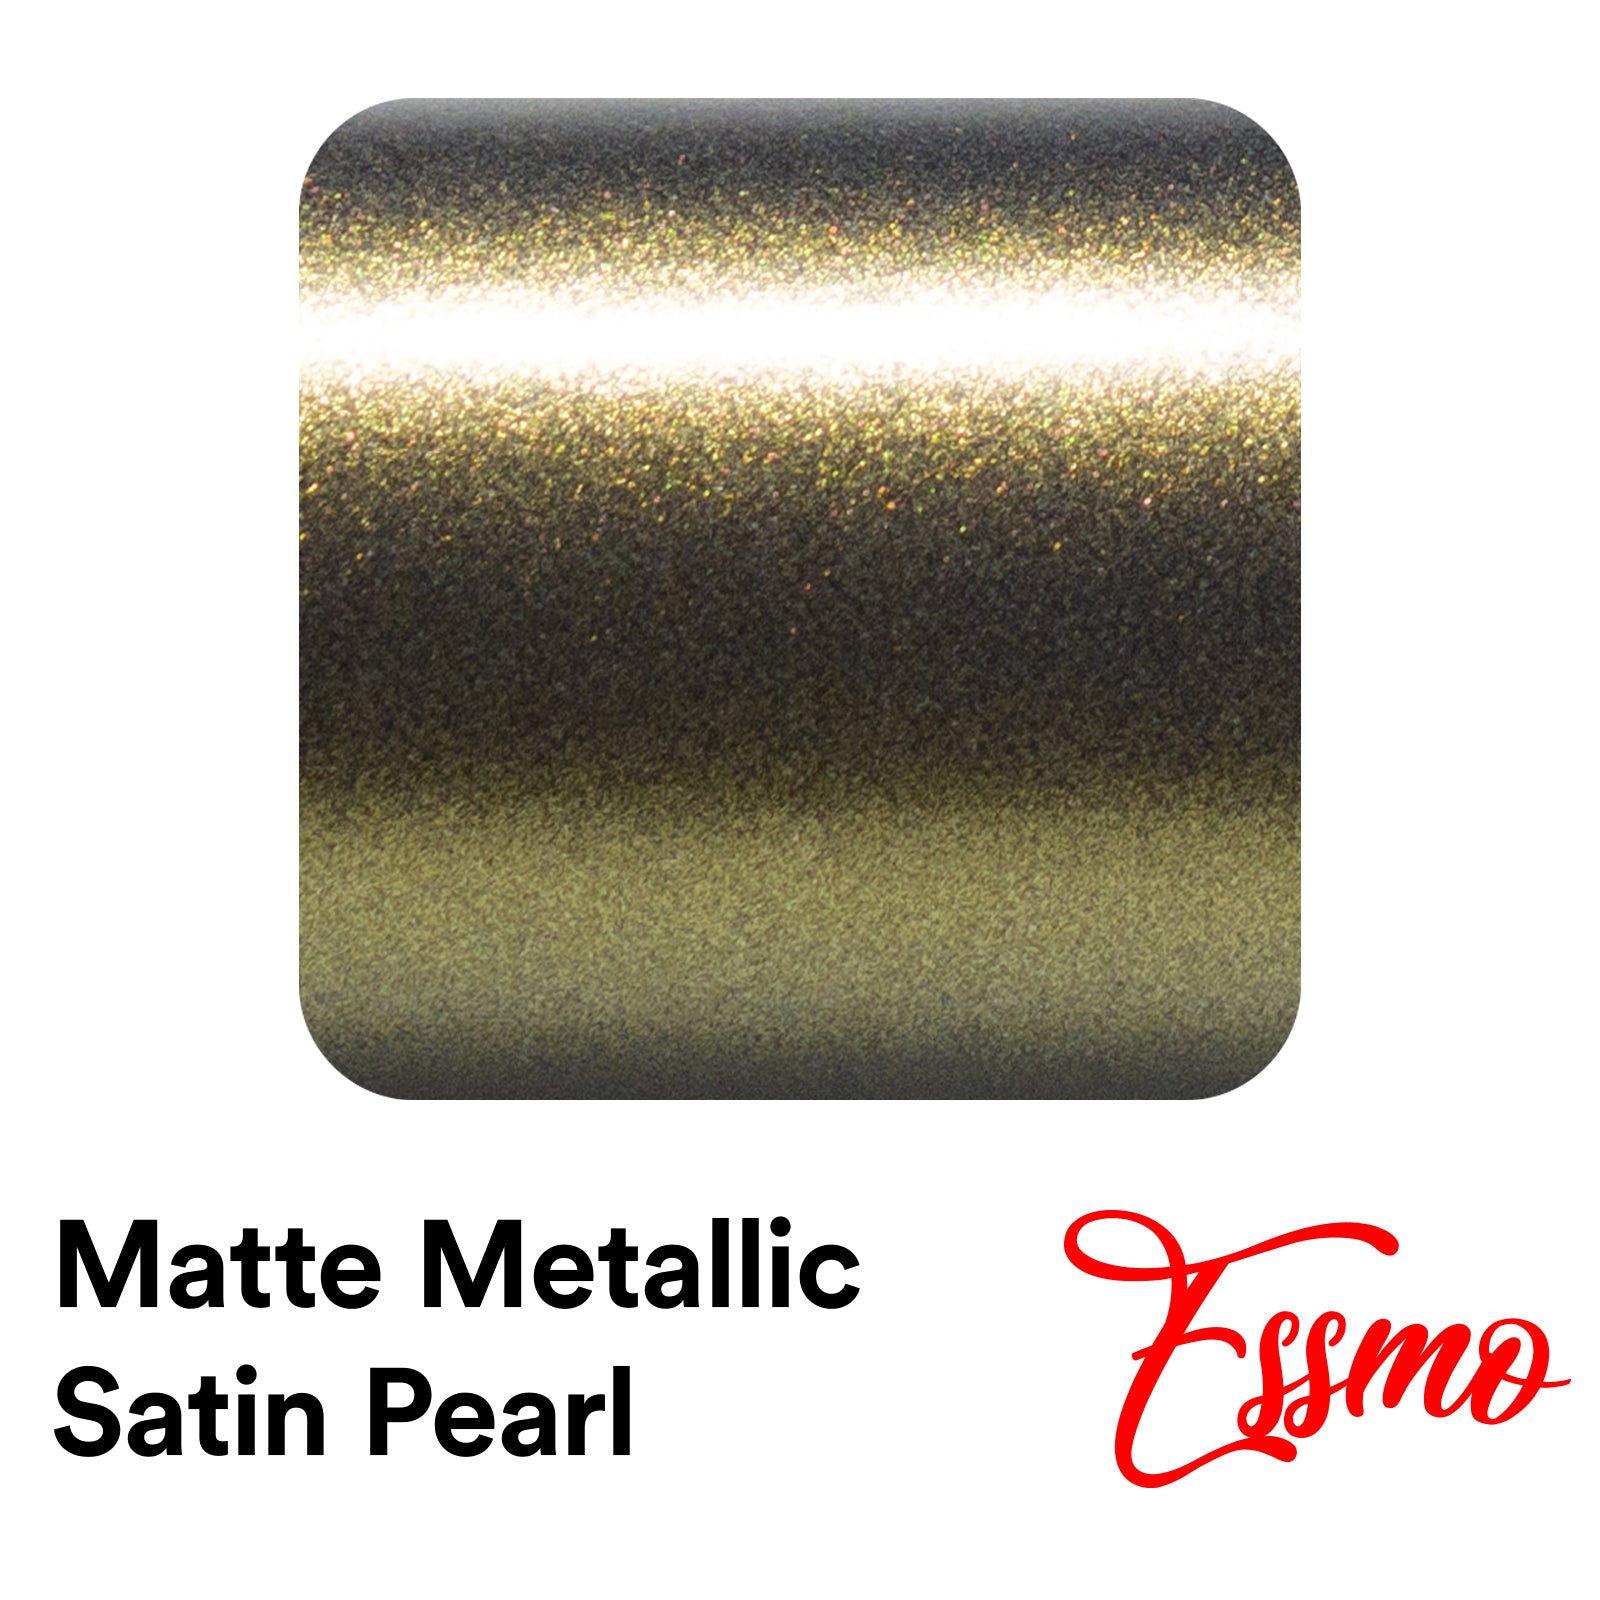 High Quality Matte Brushed Gold Car Vinyl Wrap